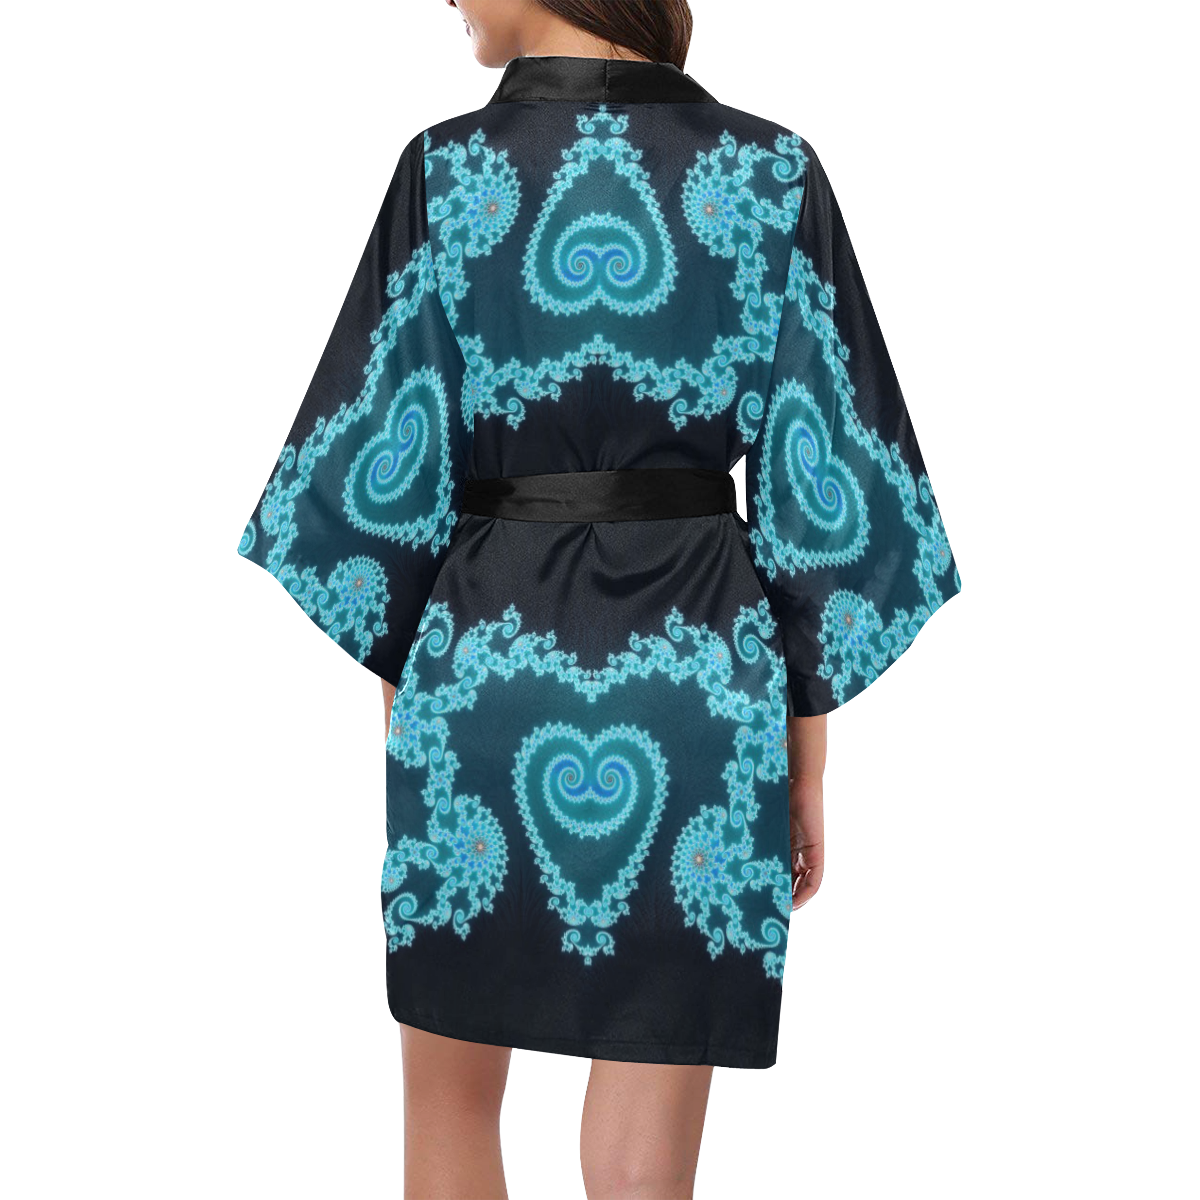 Sky Blue and Black Hearts Lace Fractal Abstract Kimono Robe